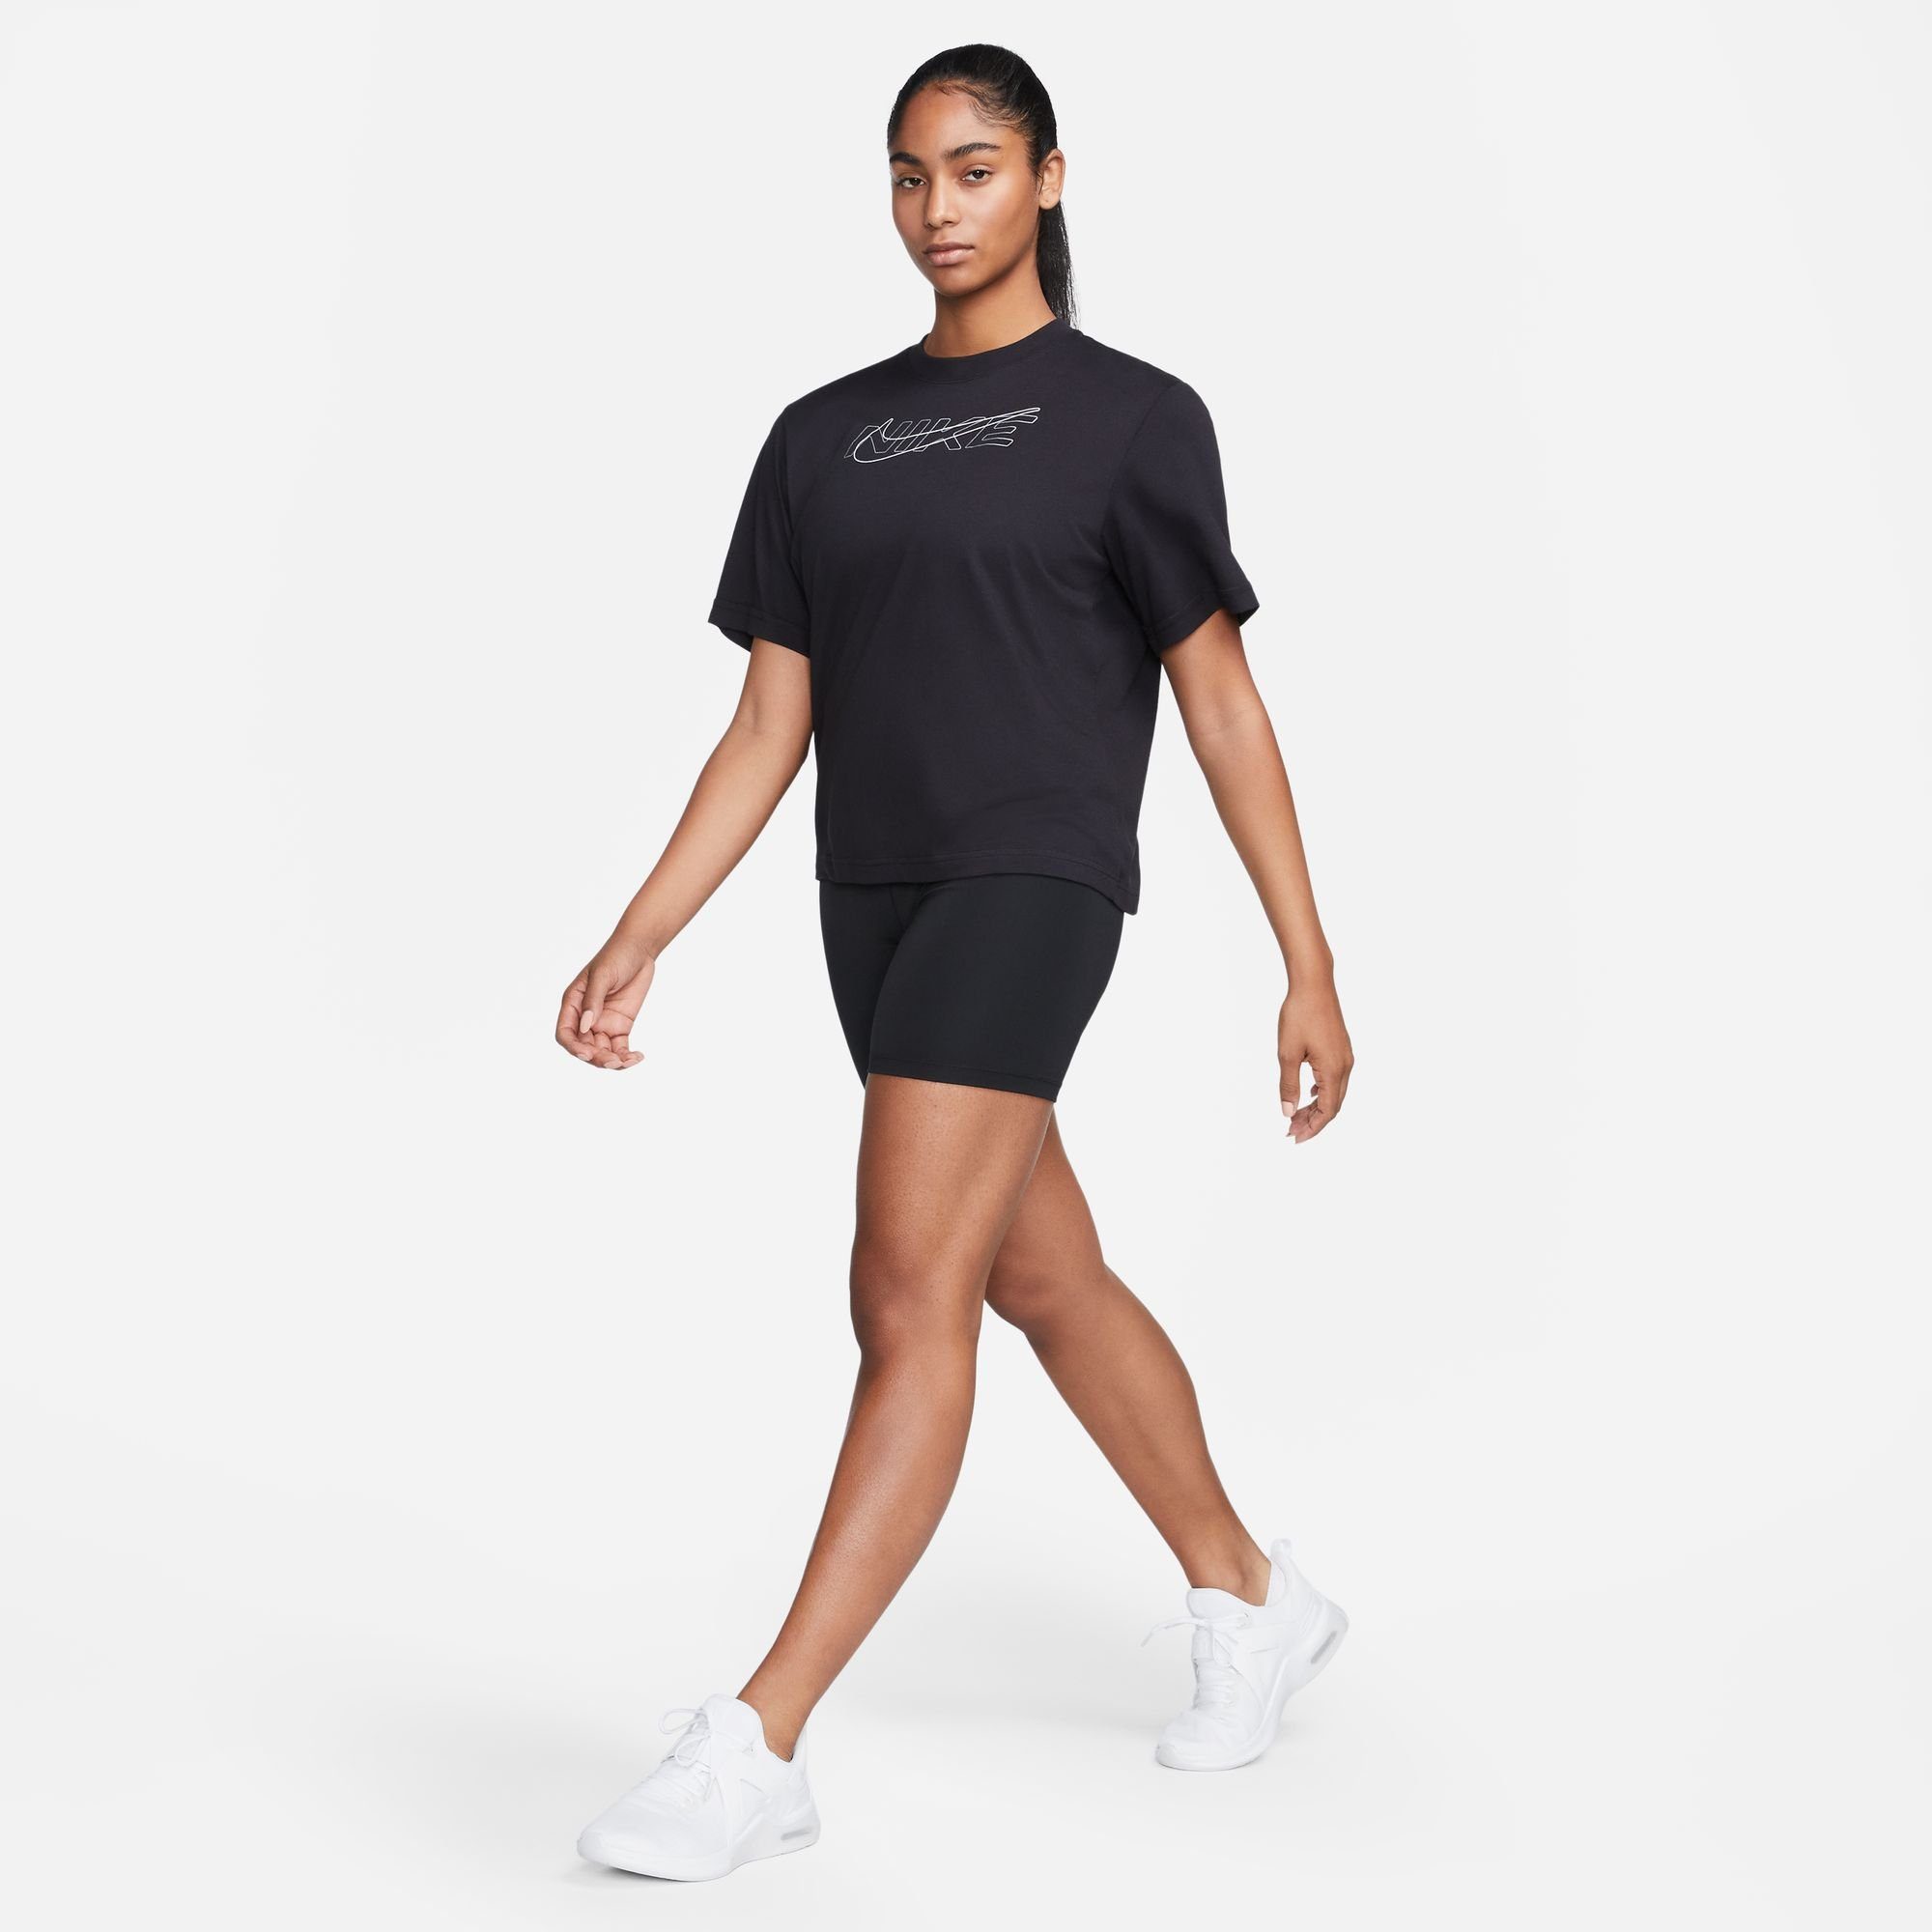 Nike Trainingstights DRI-FIT ONE WOMEN'S HIGH-WAISTED schwarz SHORTS BIKER